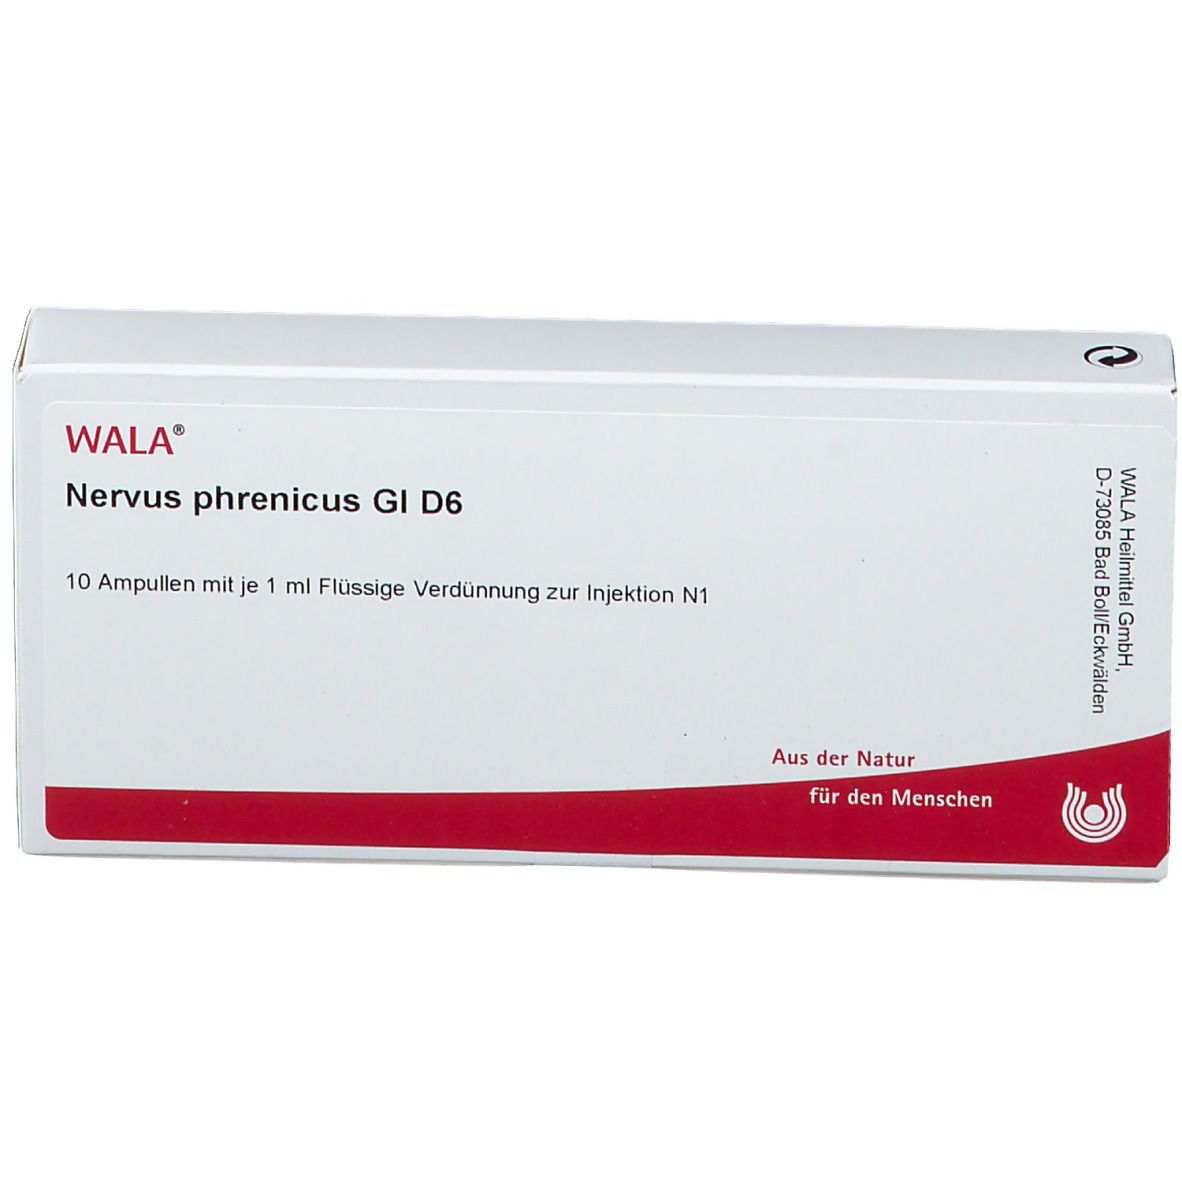 WALA® Nervus phrenicus Gl D 6